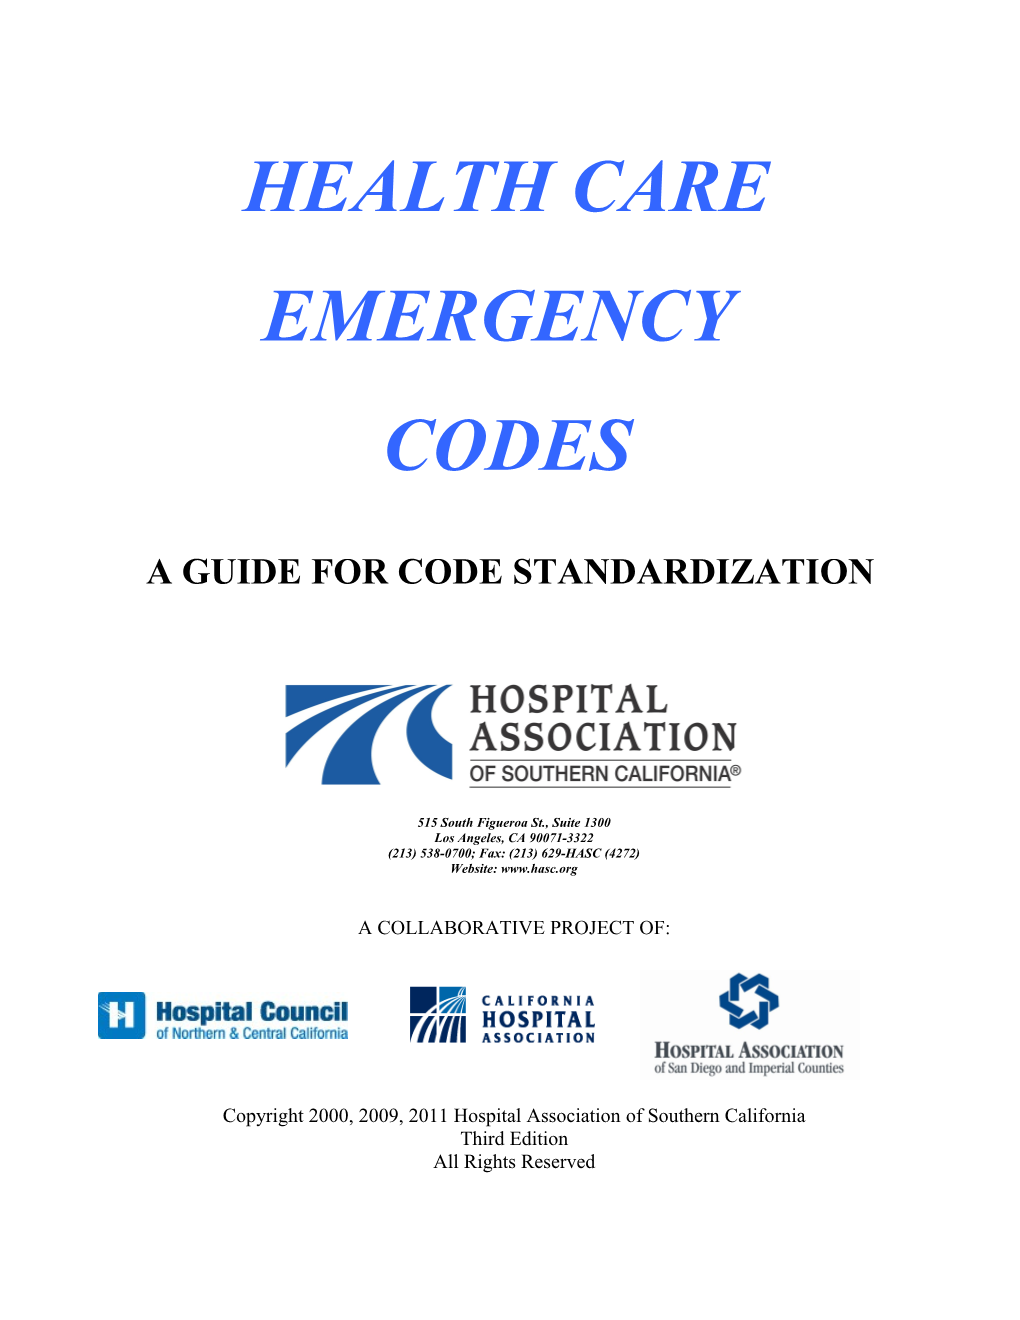 HASC Standardized Emergency Codes